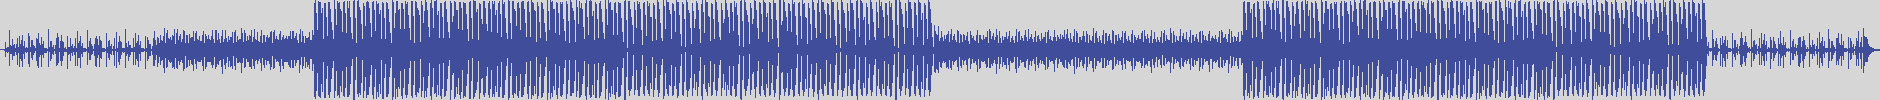 nf_boyz_records [NFY073] Dj Itan Renzetti - Muchacho Malo [Original Mix] audio wave form